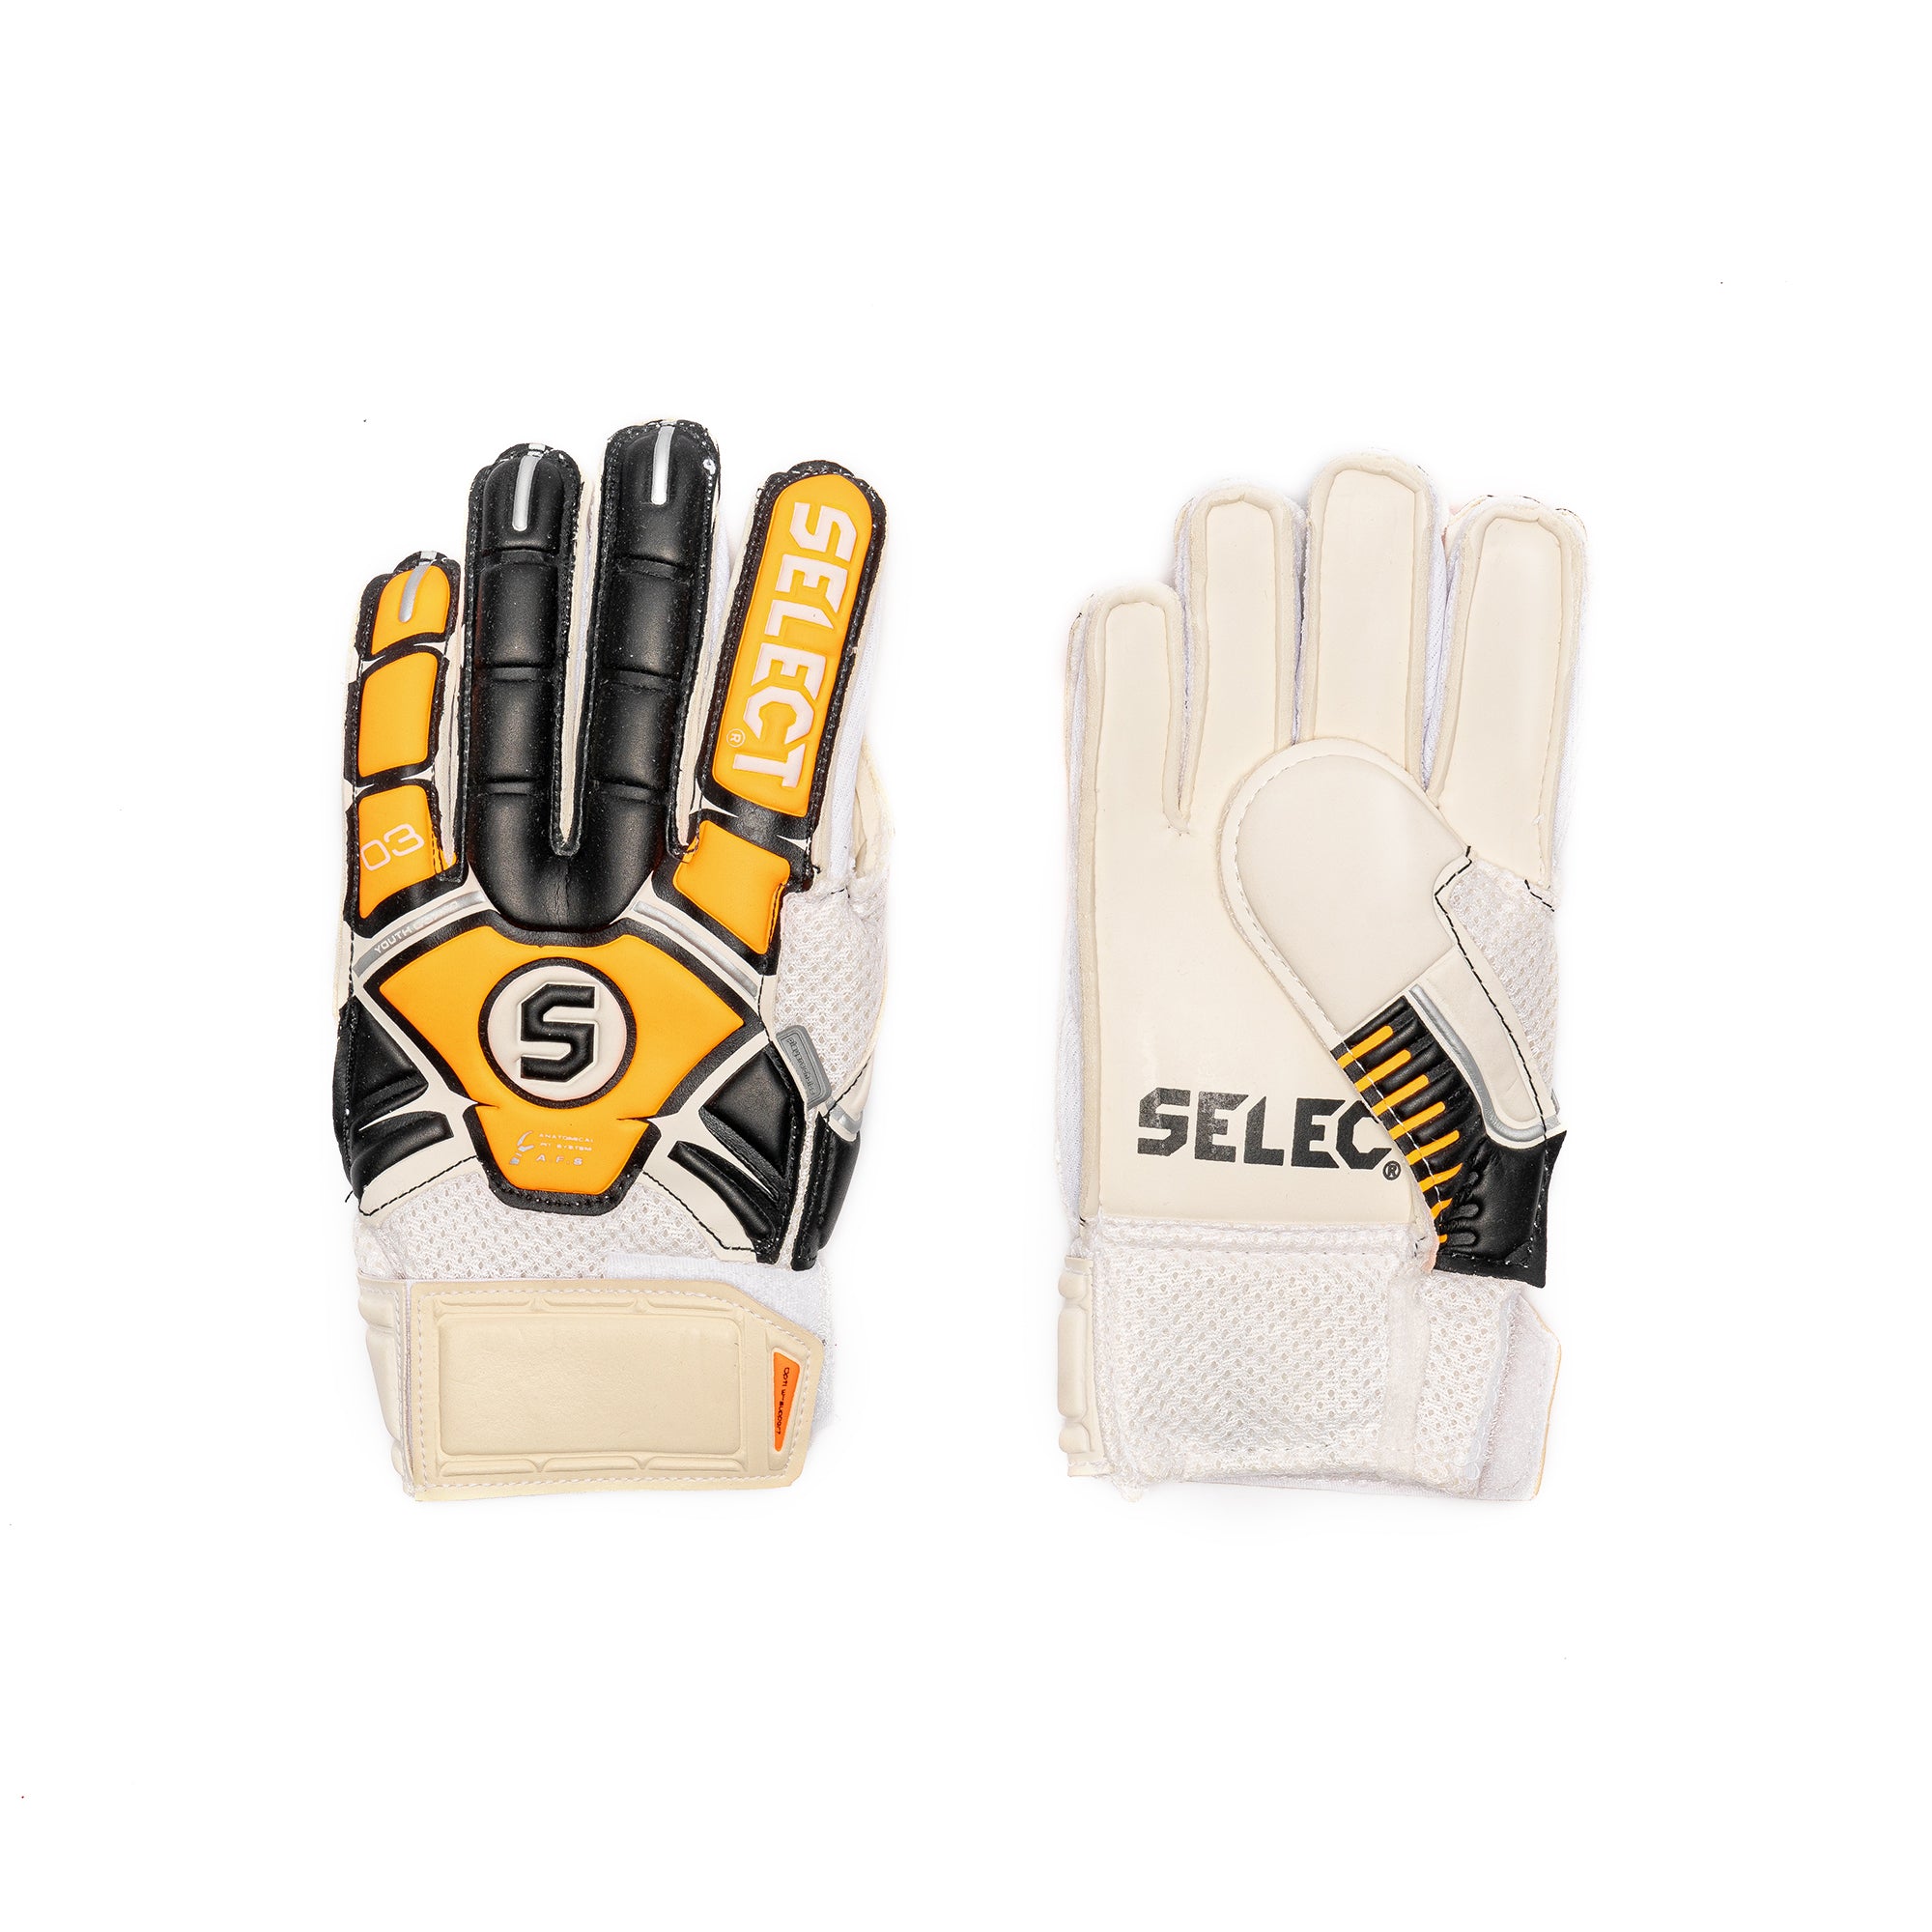 Select 03 Glove